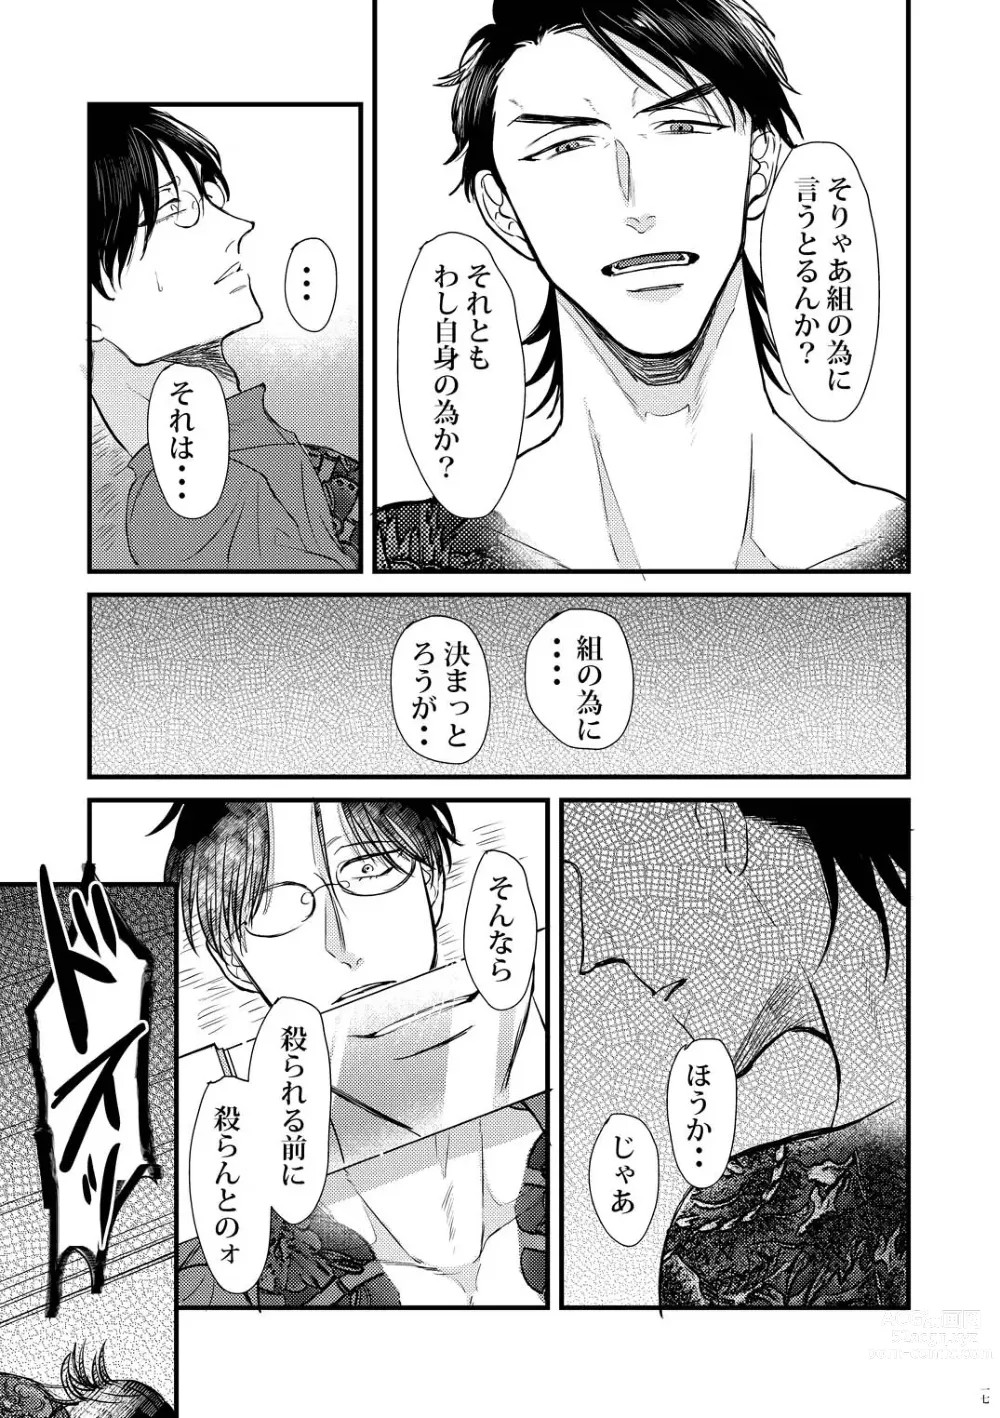 Page 16 of doujinshi Kagerou